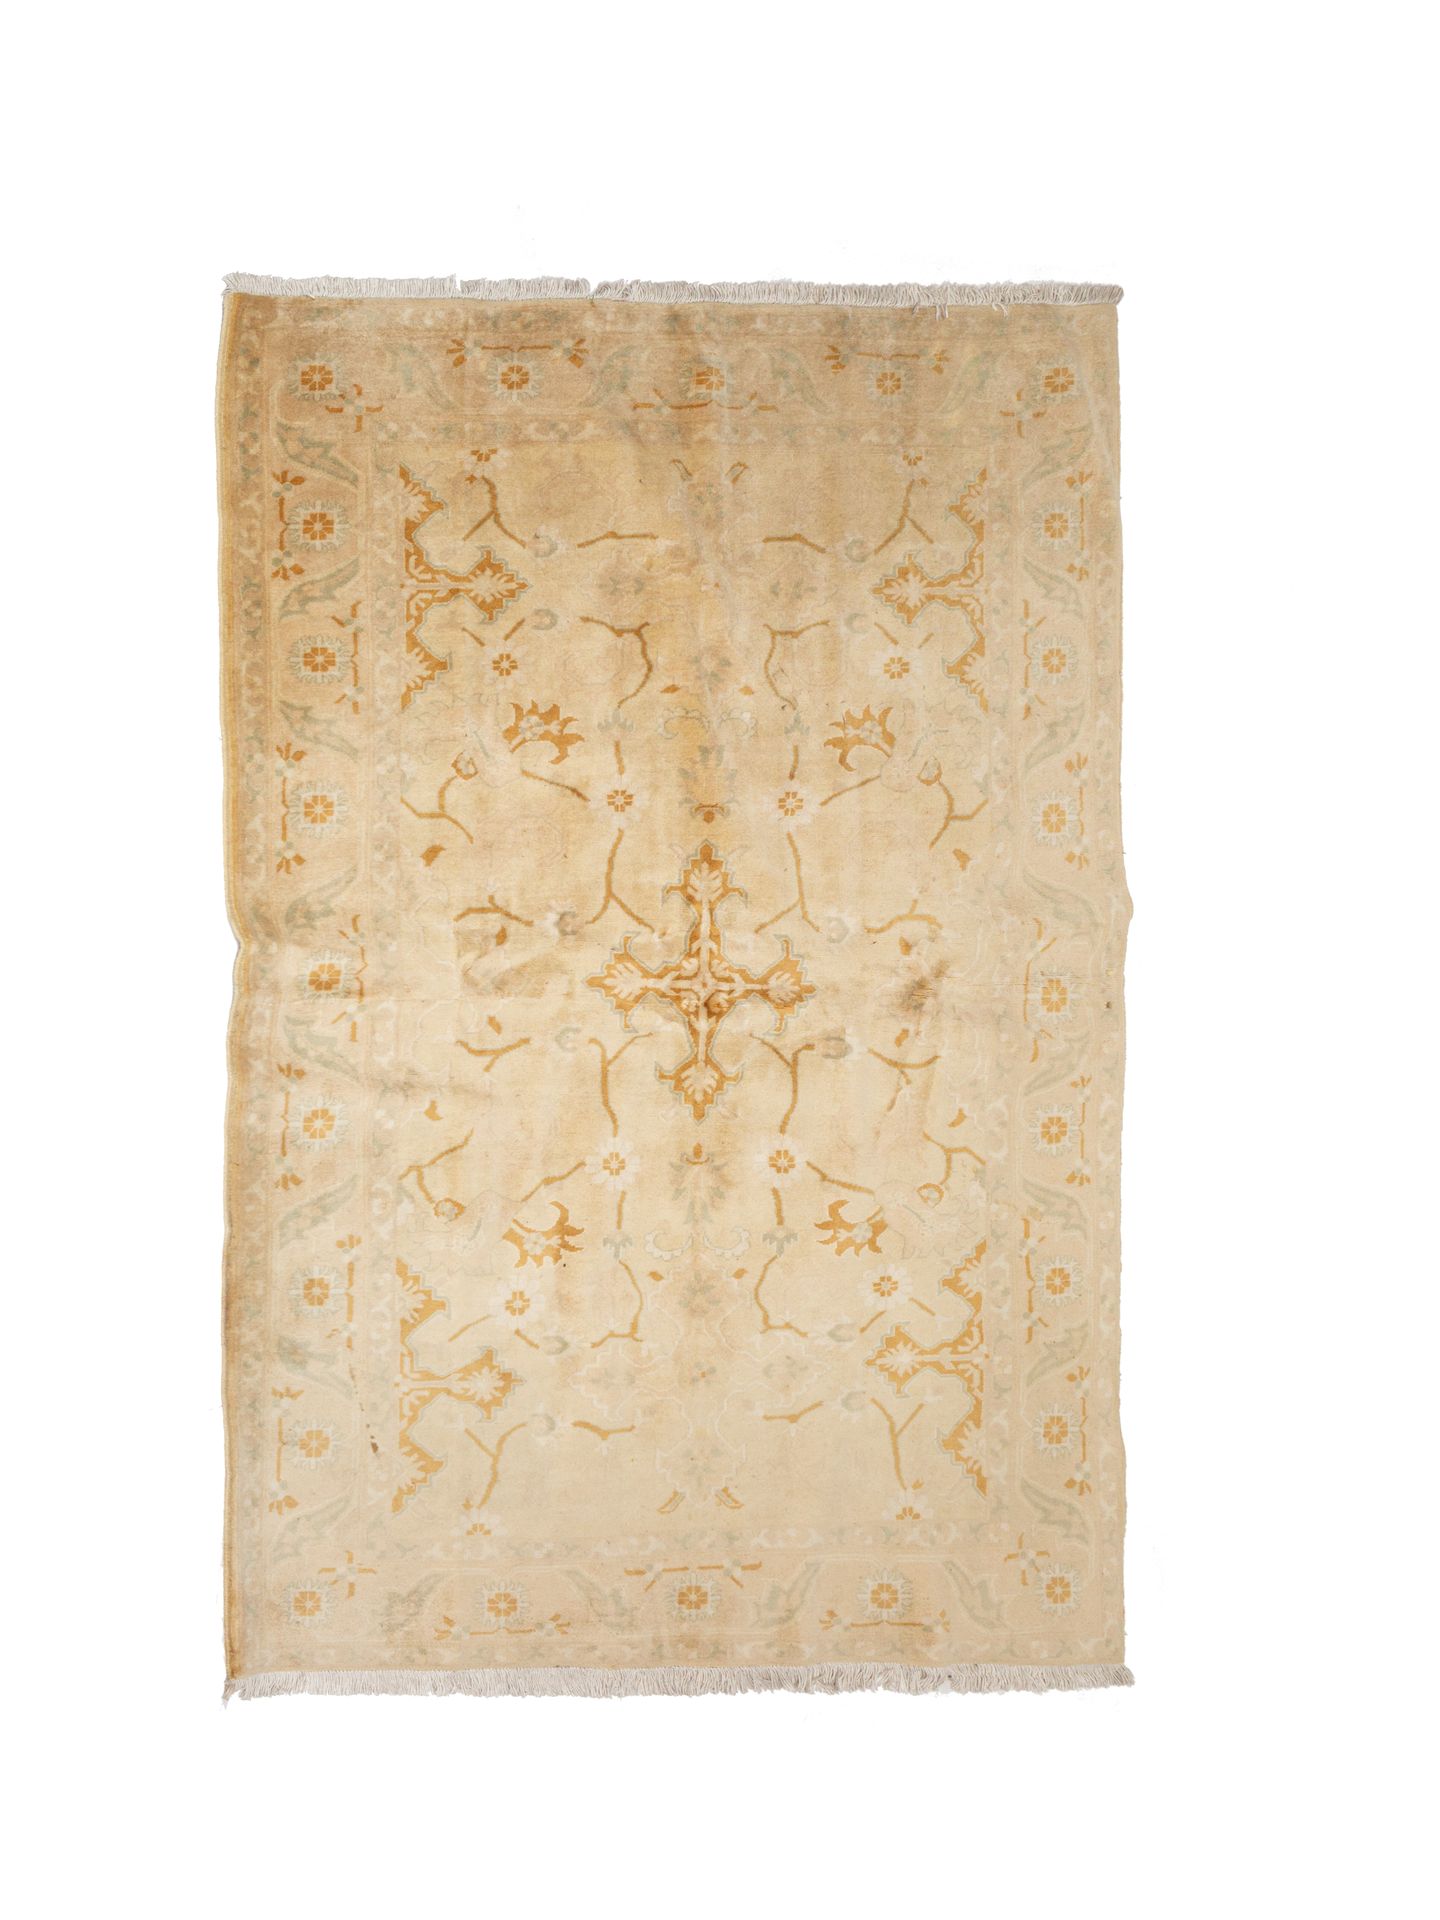 Null 印度阿格拉传统的乔比地毯，约1980年

尺寸：220 x 170厘米

技术特点 : 棉质底面的丝质羊毛绒布

总体状况良好，无磨损或污渍

象牙色&hellip;